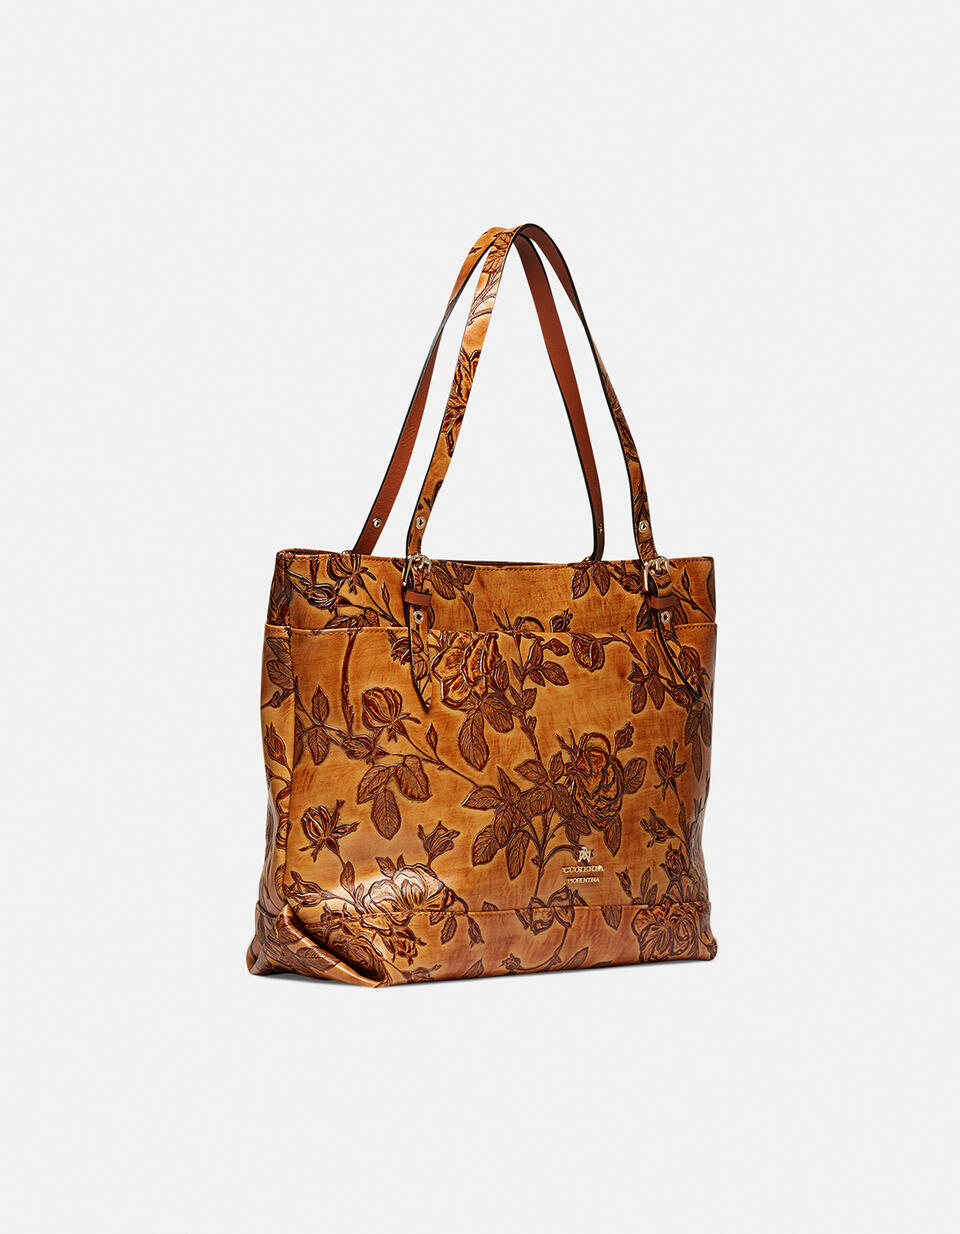 Big Mimì shopping bag keystone design - SHOPPING - WOMEN'S BAGS | bags Mimì BEIGE - SHOPPING - WOMEN'S BAGS | bagsCuoieria Fiorentina